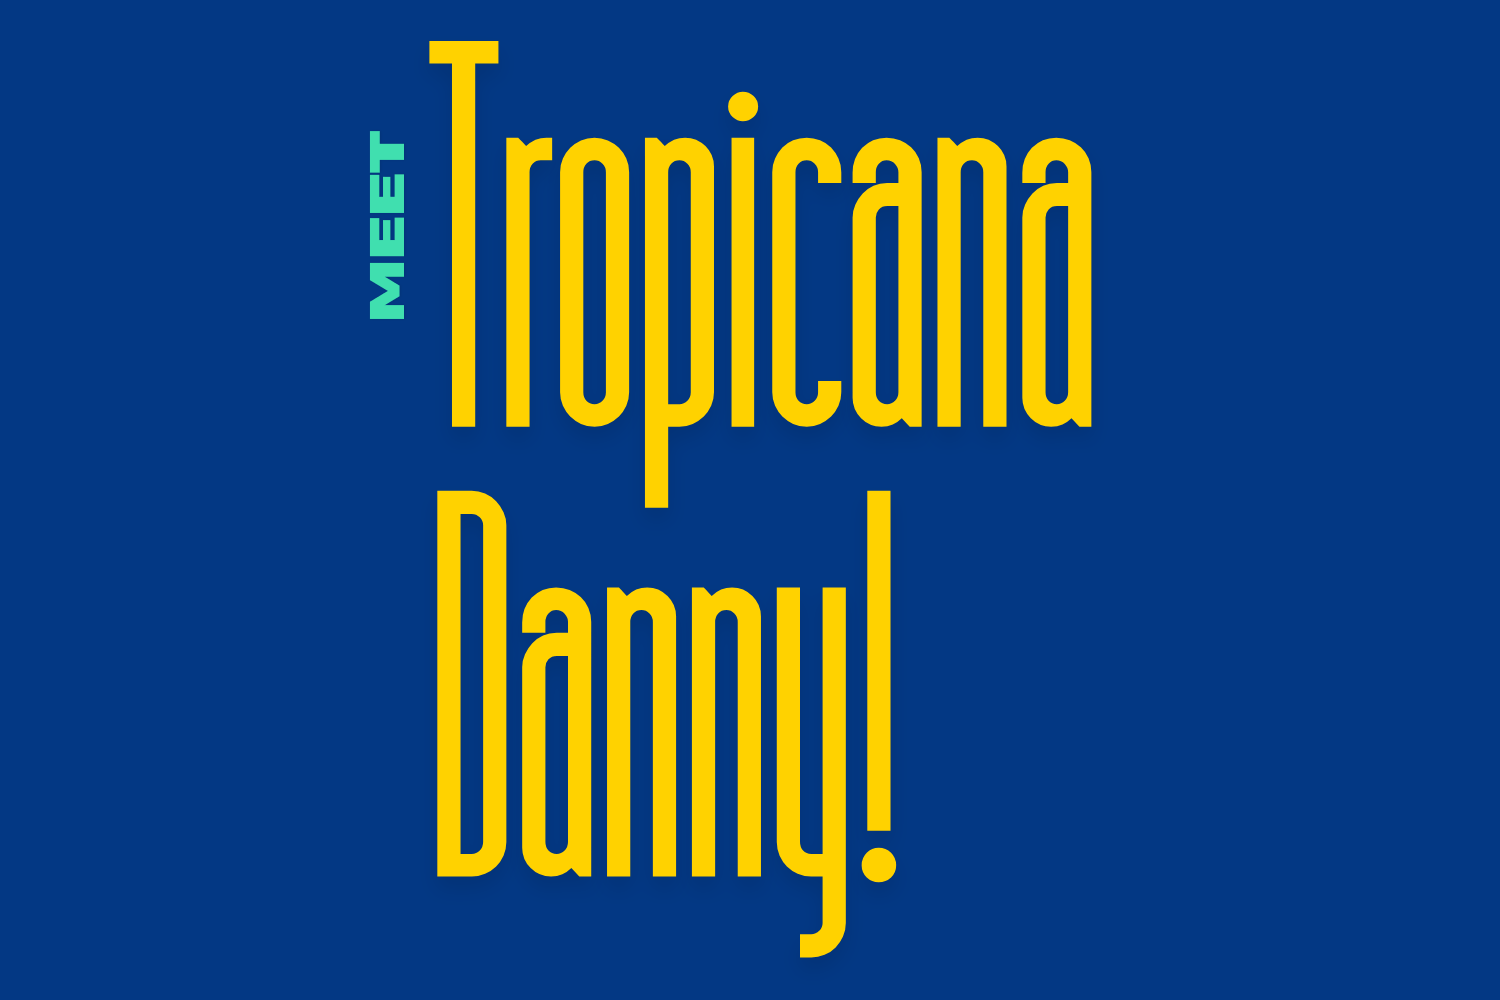 Image that says "Meet Tropicana Danny!"